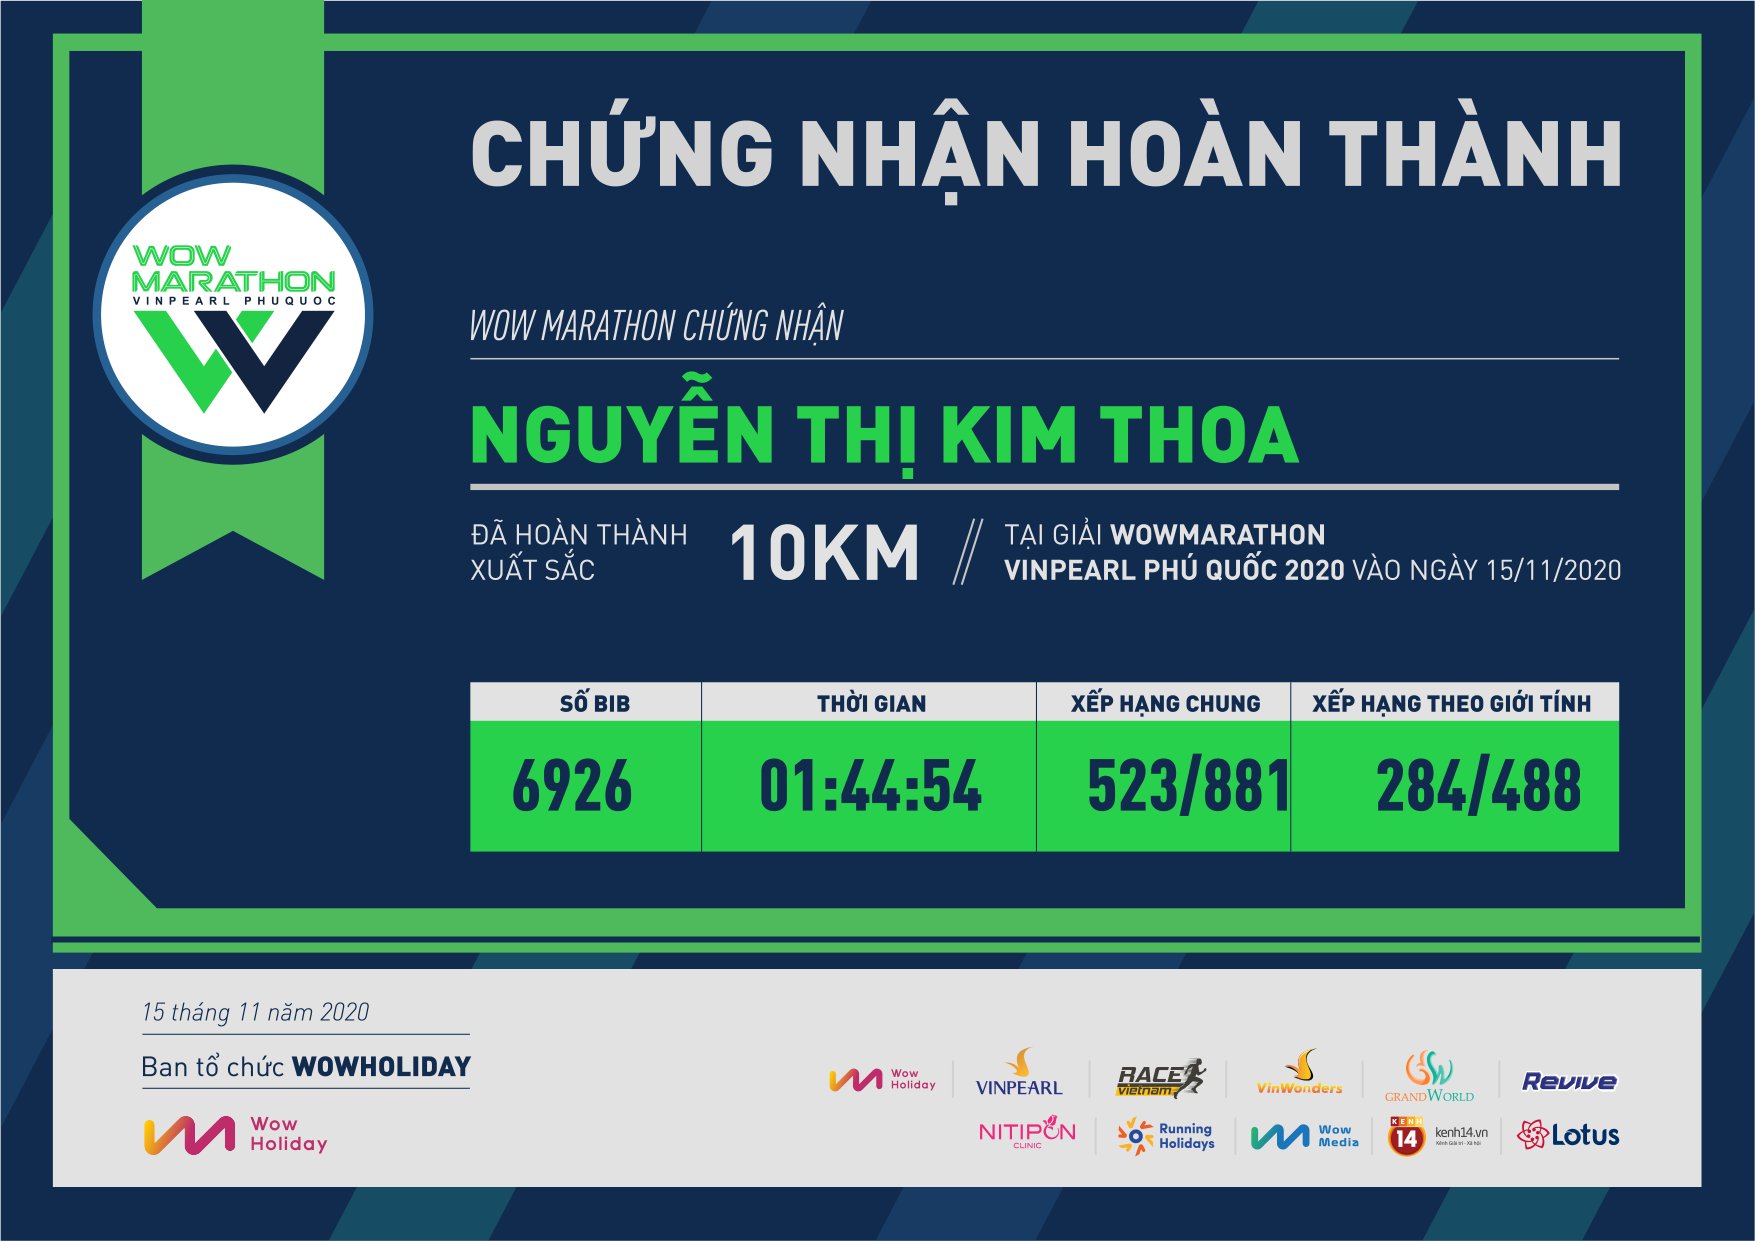 6926 - Nguyễn thị kim thoa